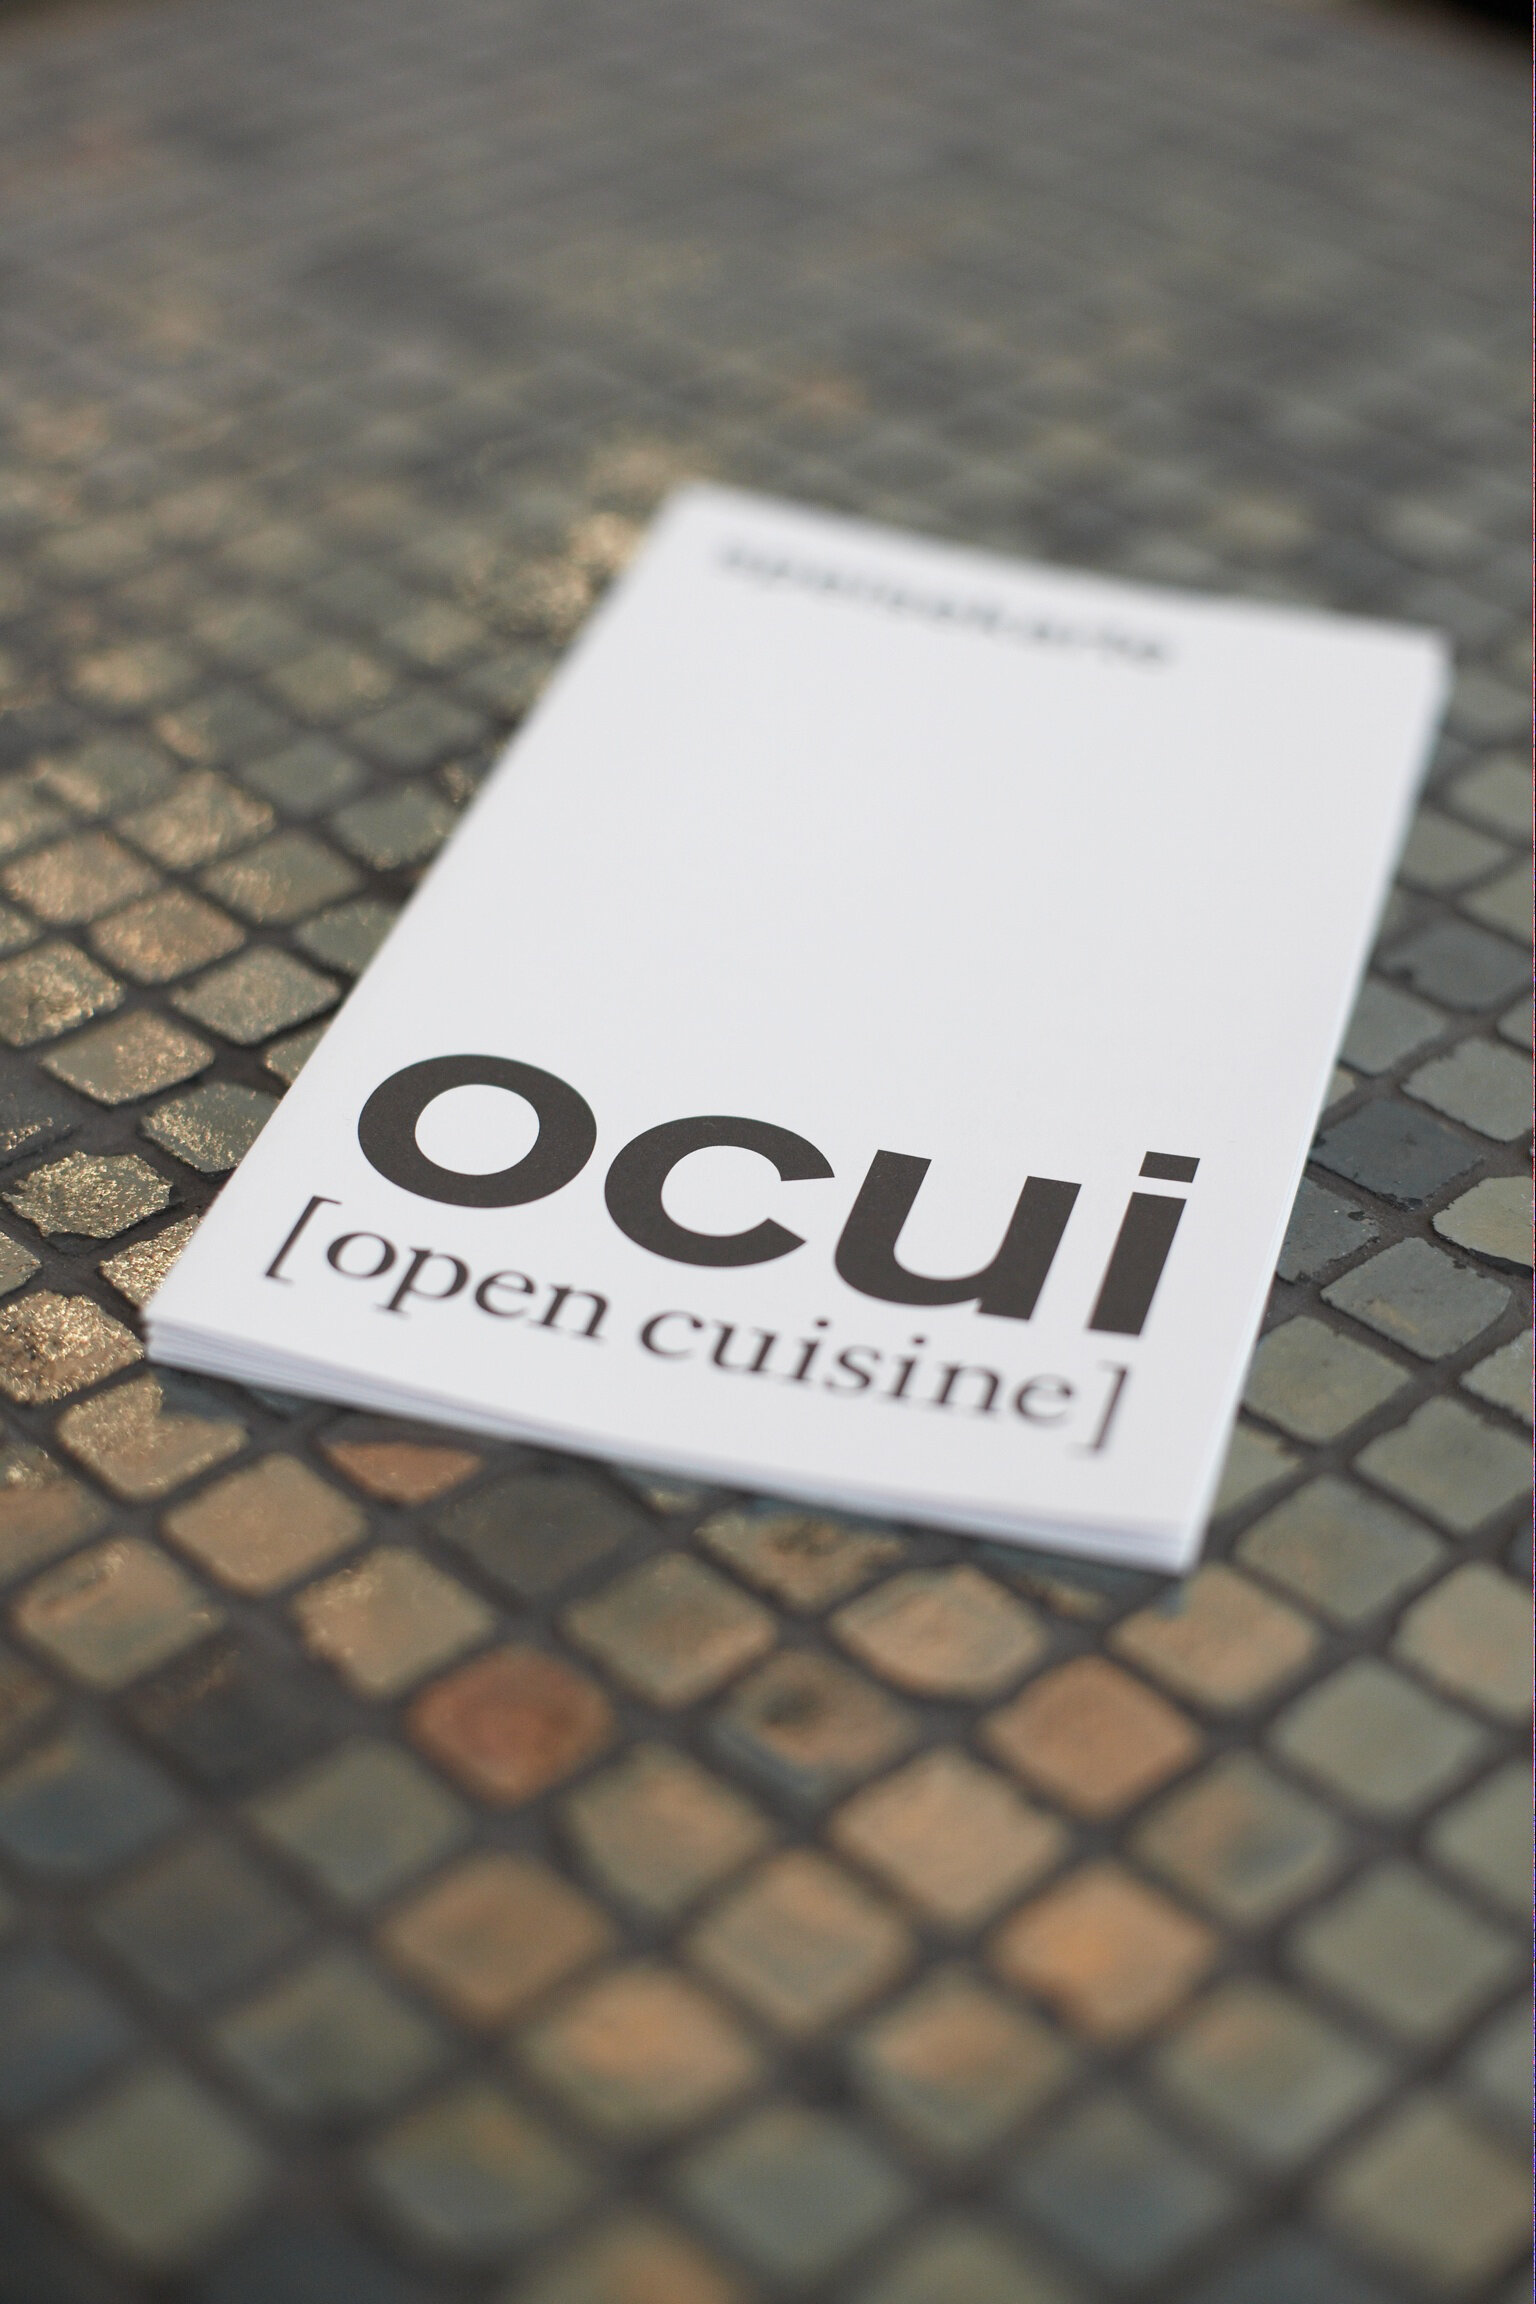 hildmannwilke_OCUI open cuisine (7).jpeg